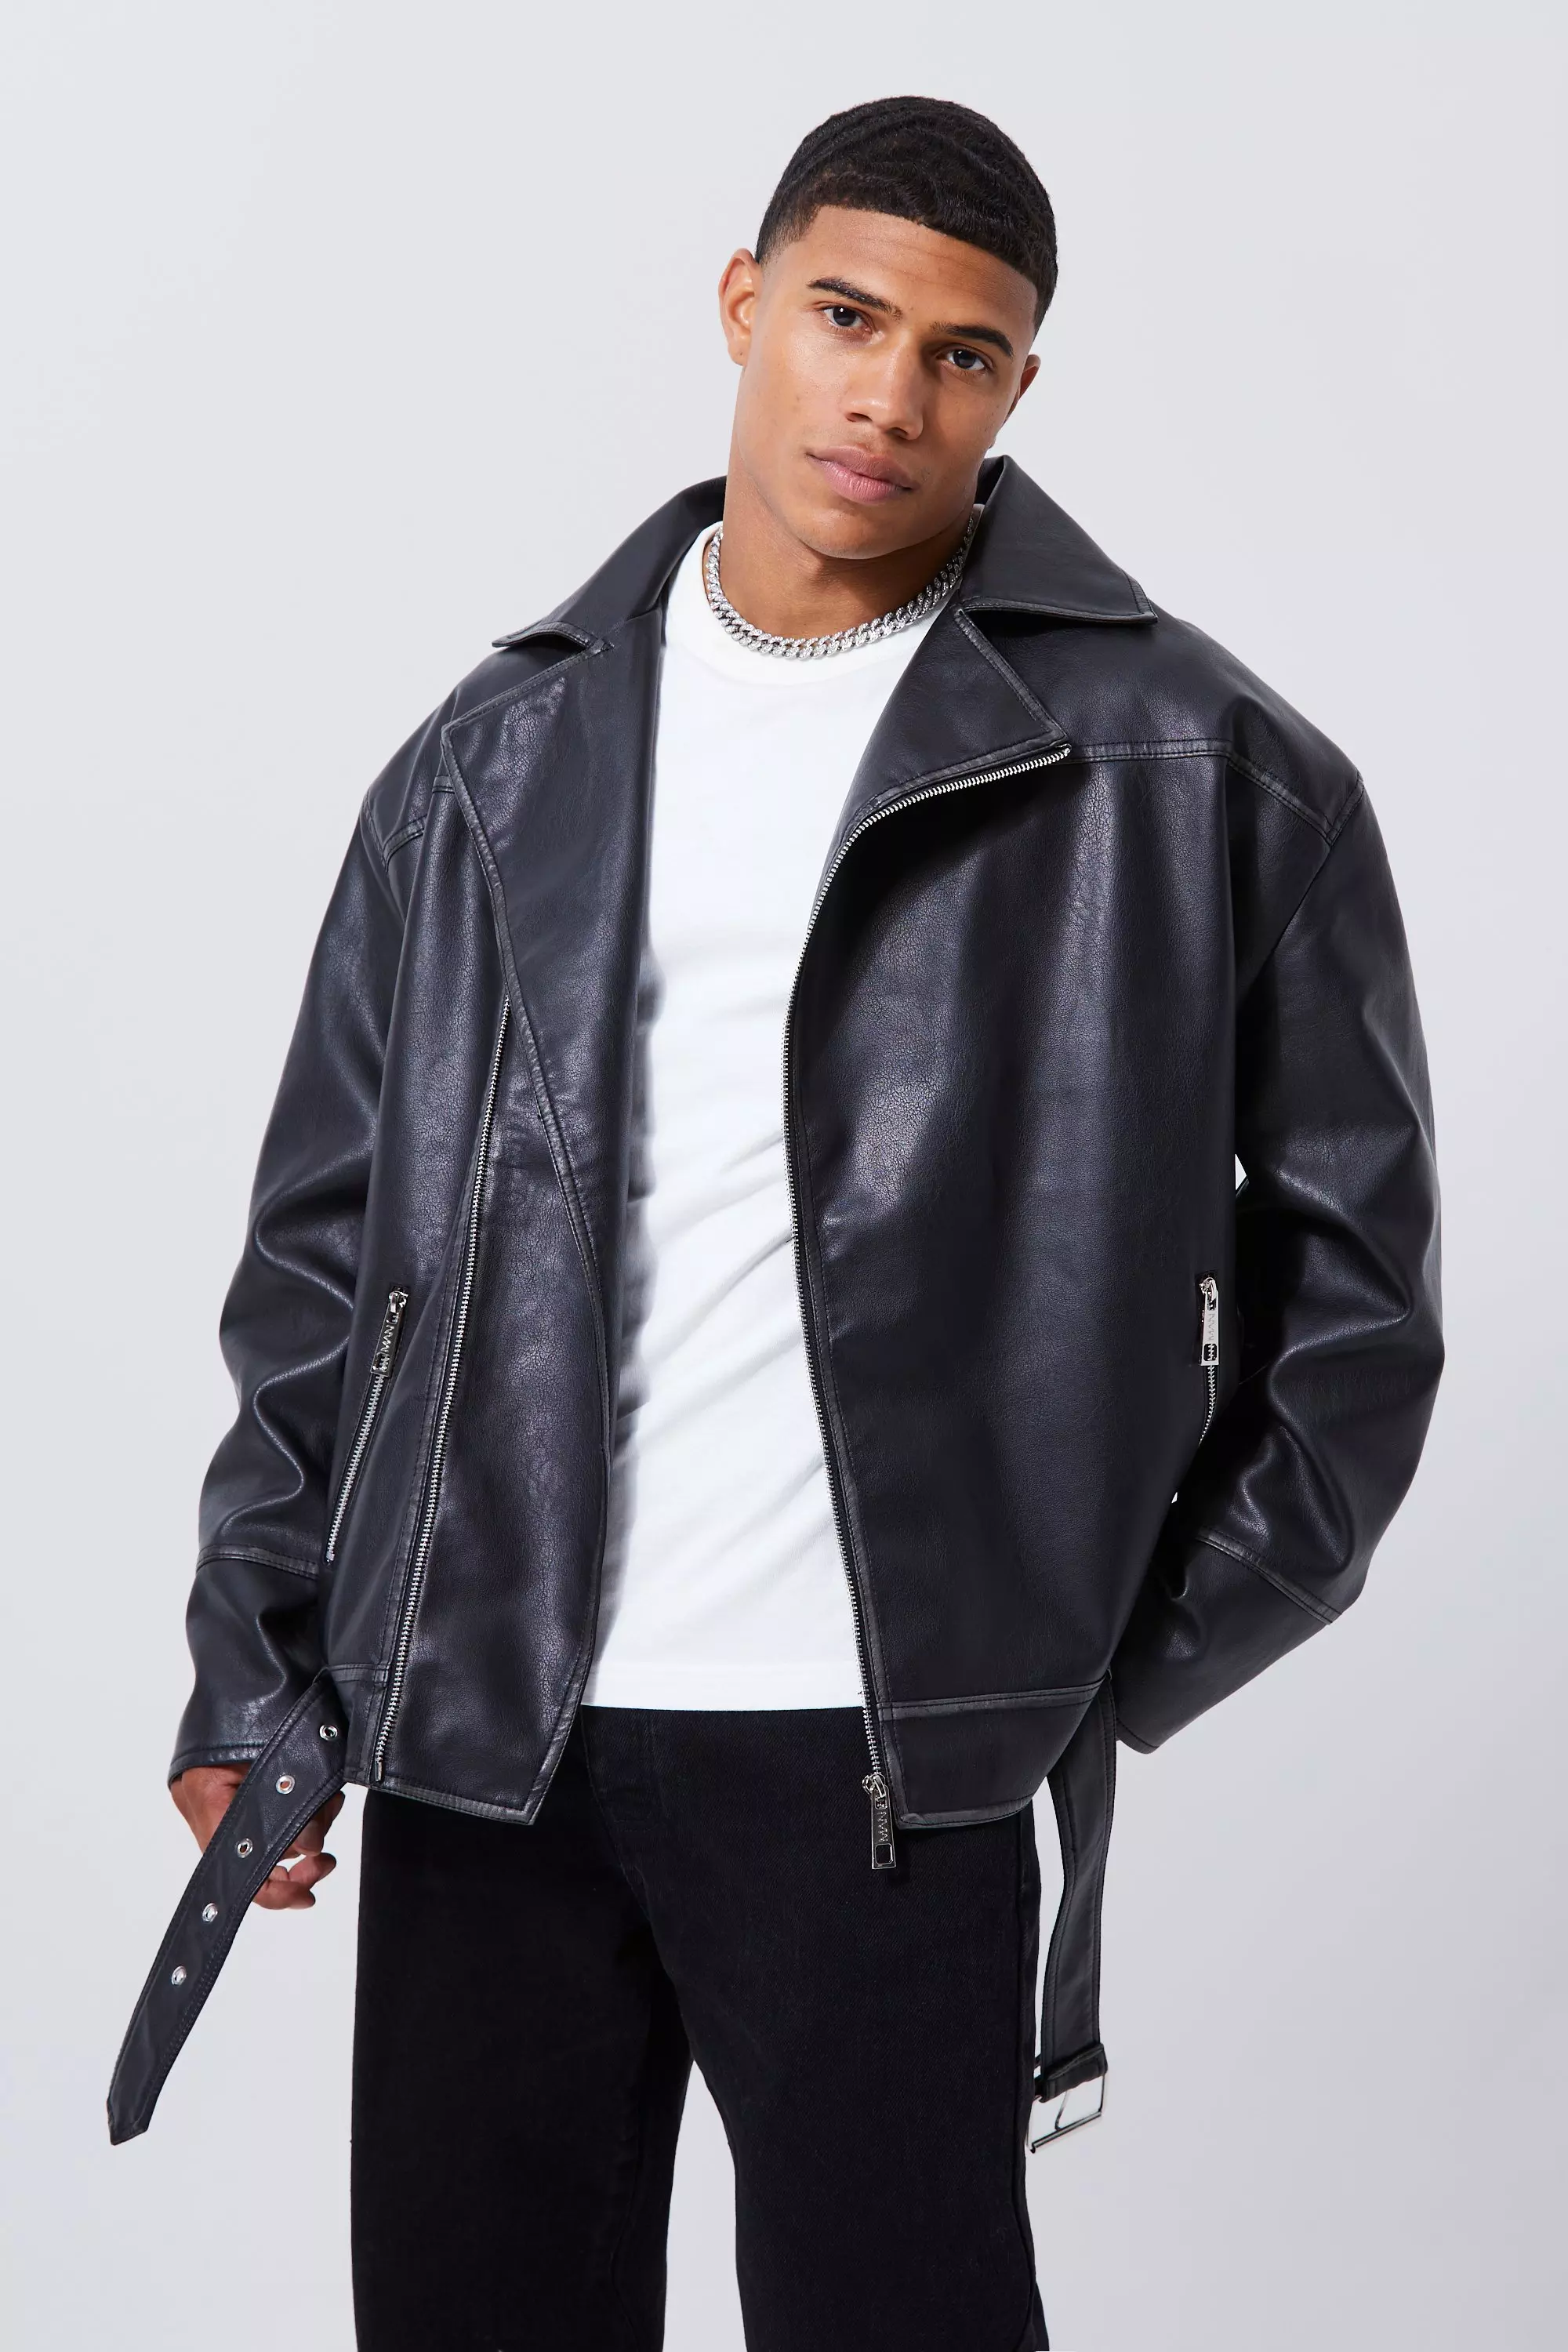 ASOS DESIGN oversized leather look biker jacket in white